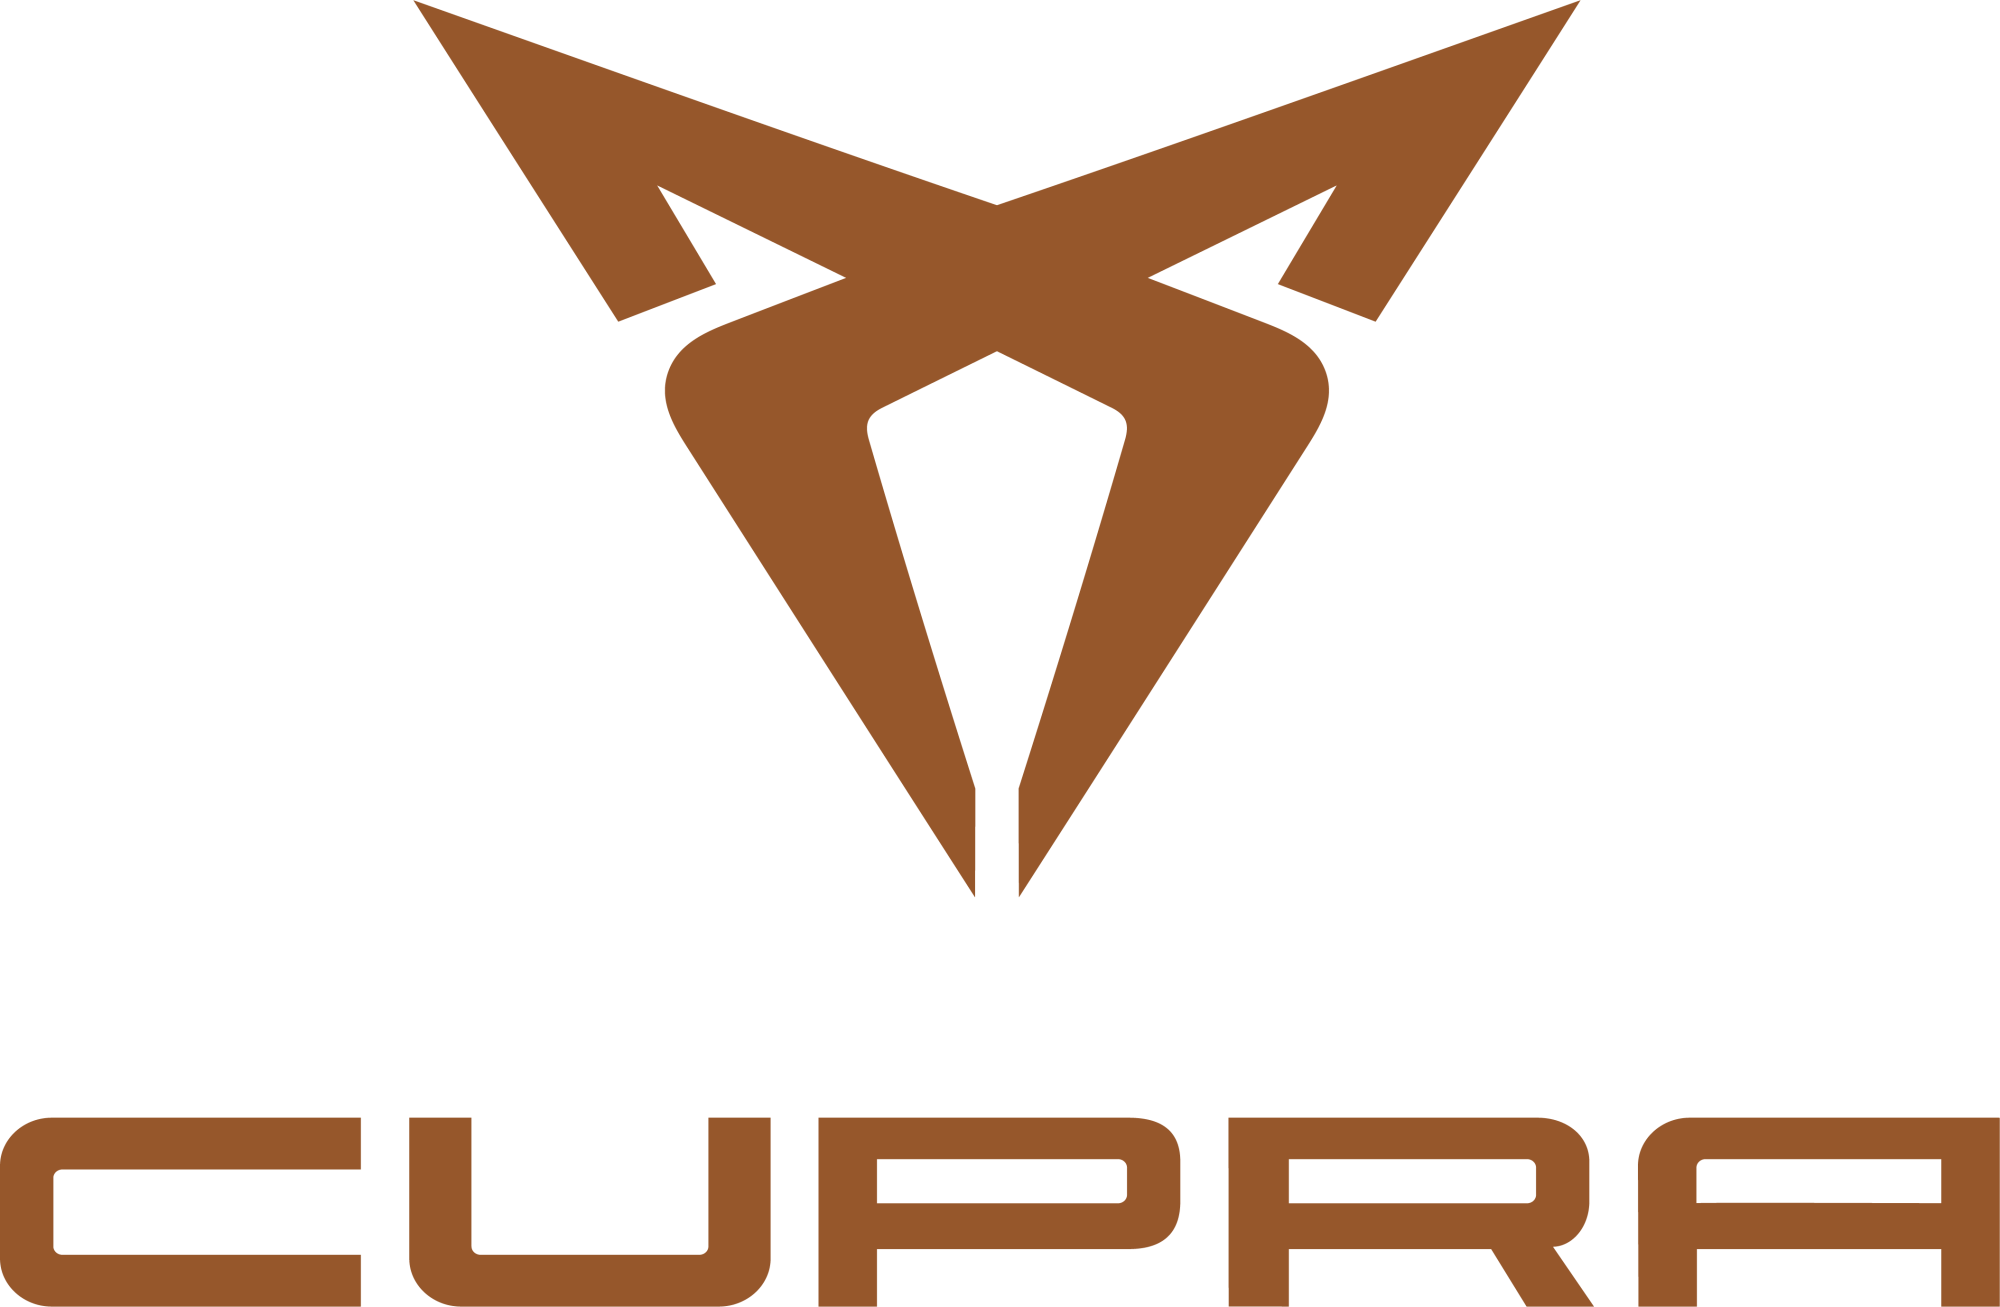 cupra-logo